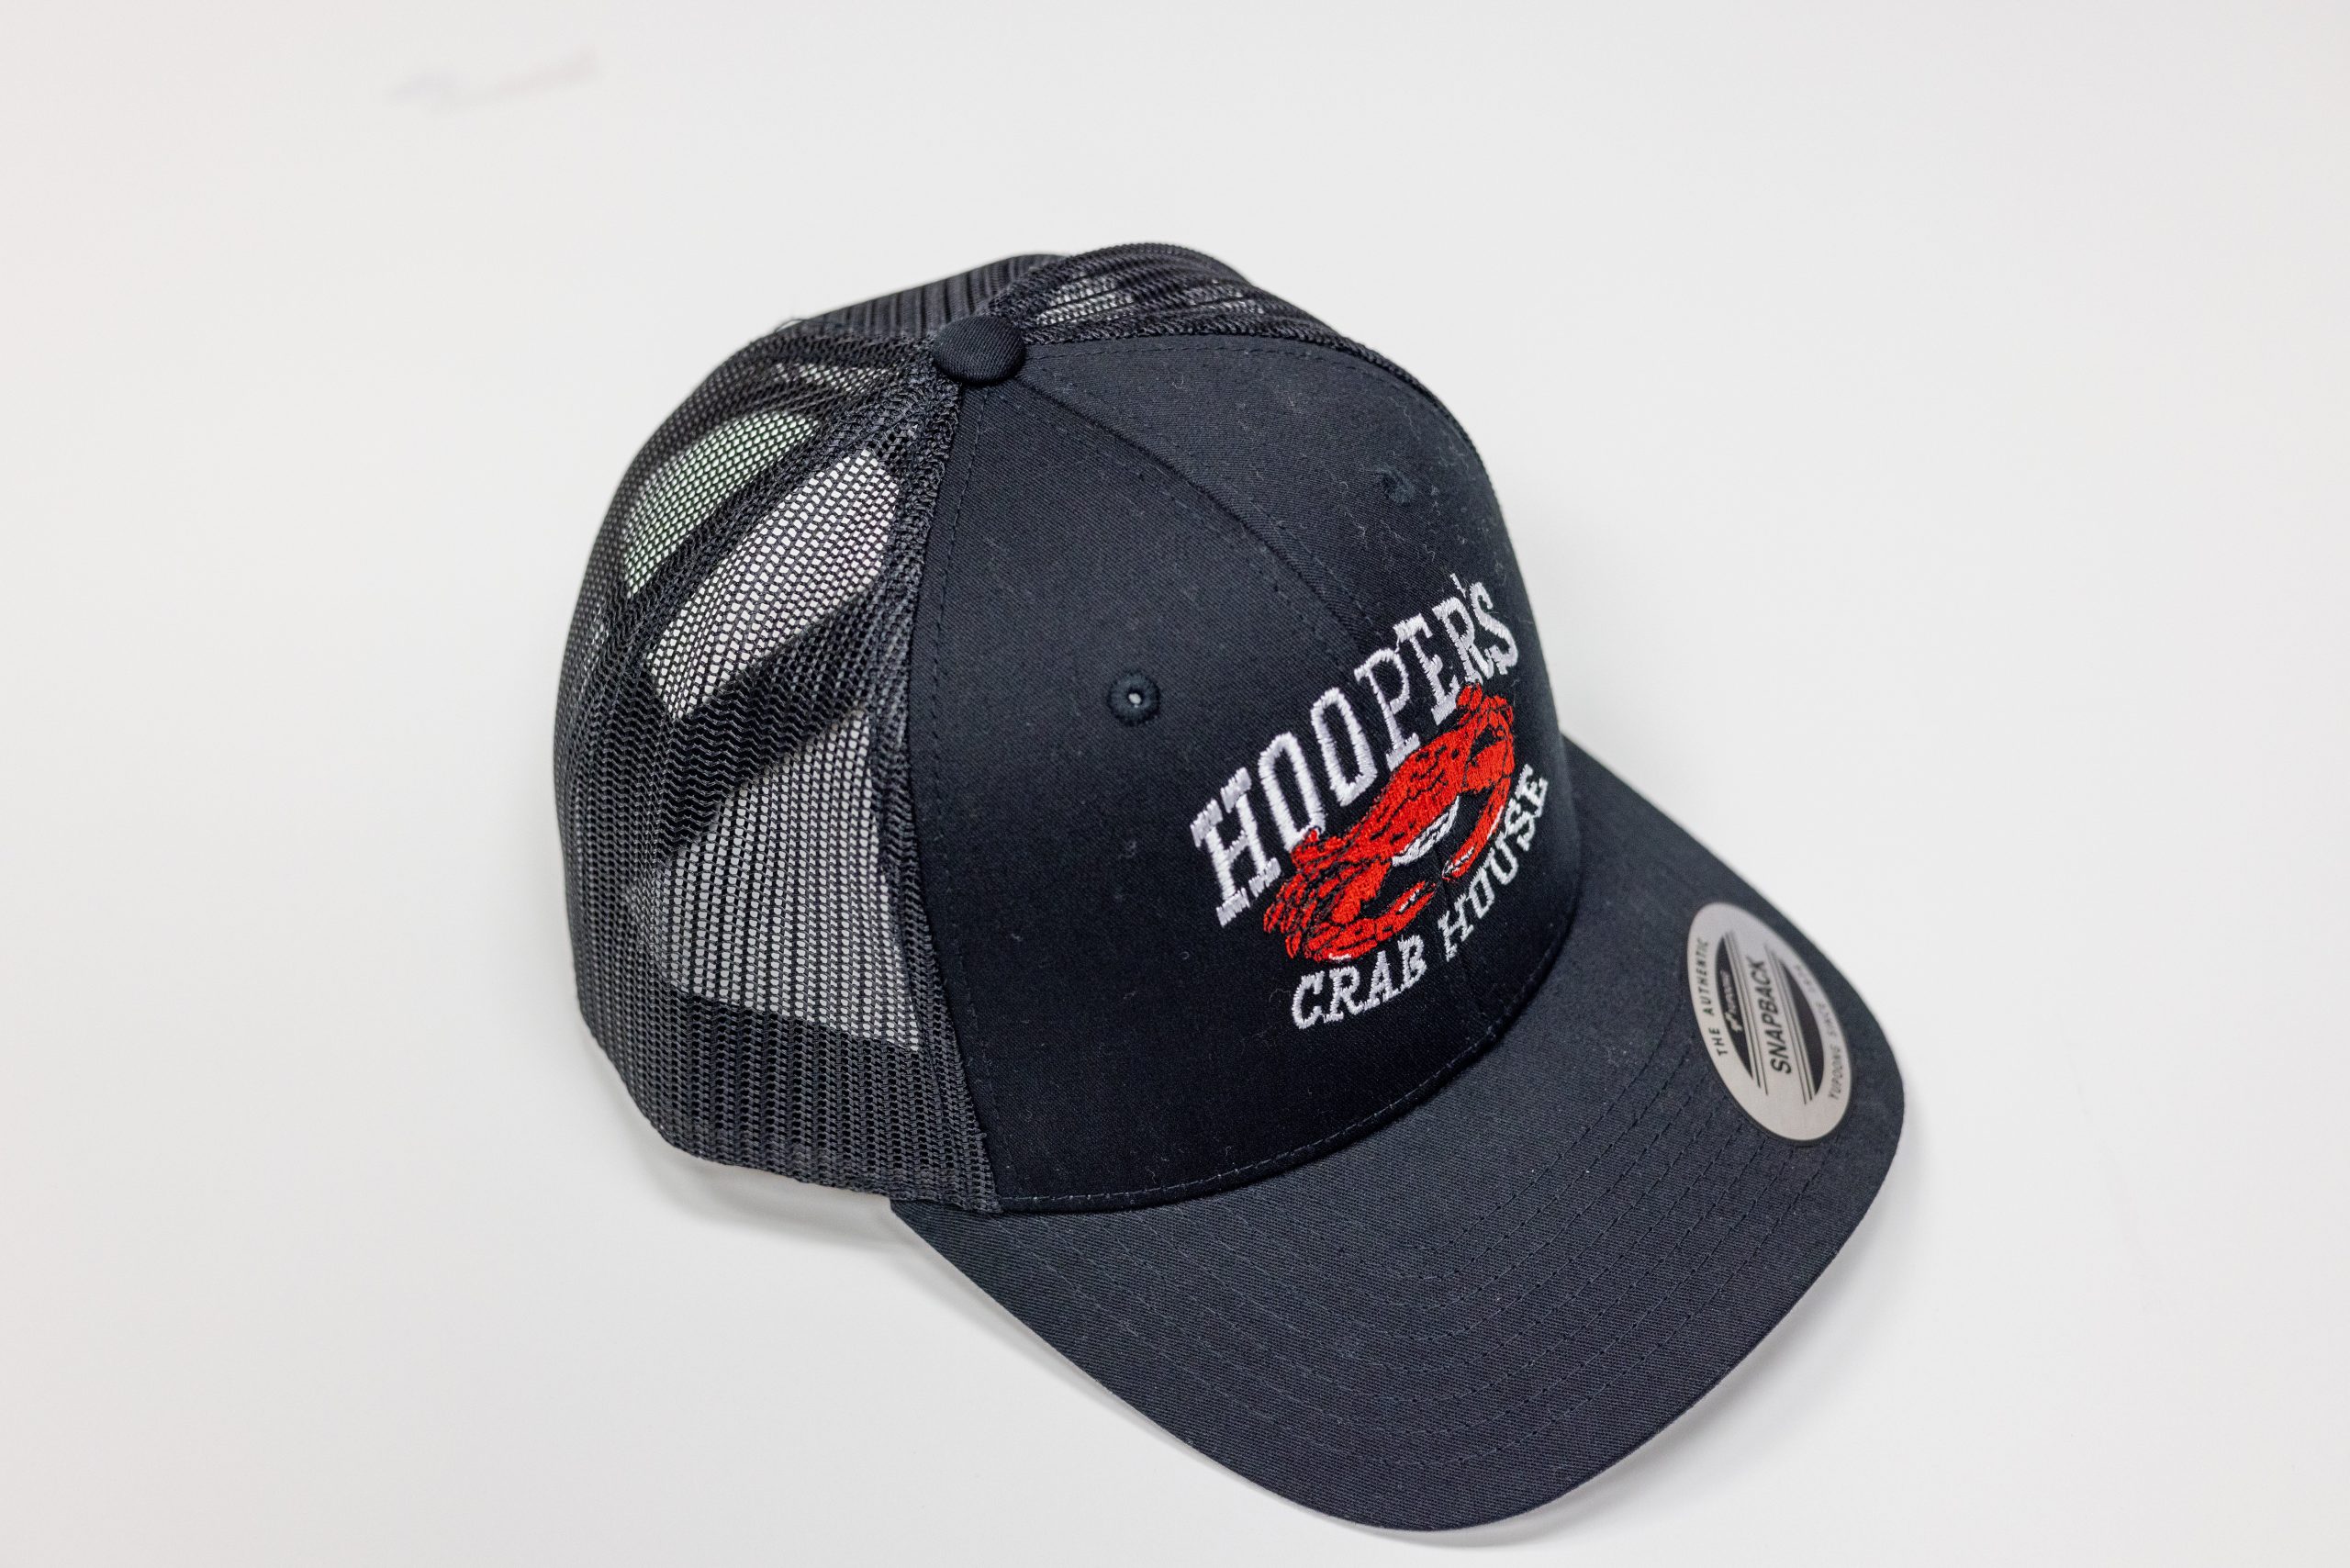 Hooper's Logo Trucker Hat, Ocean City MD Crab House